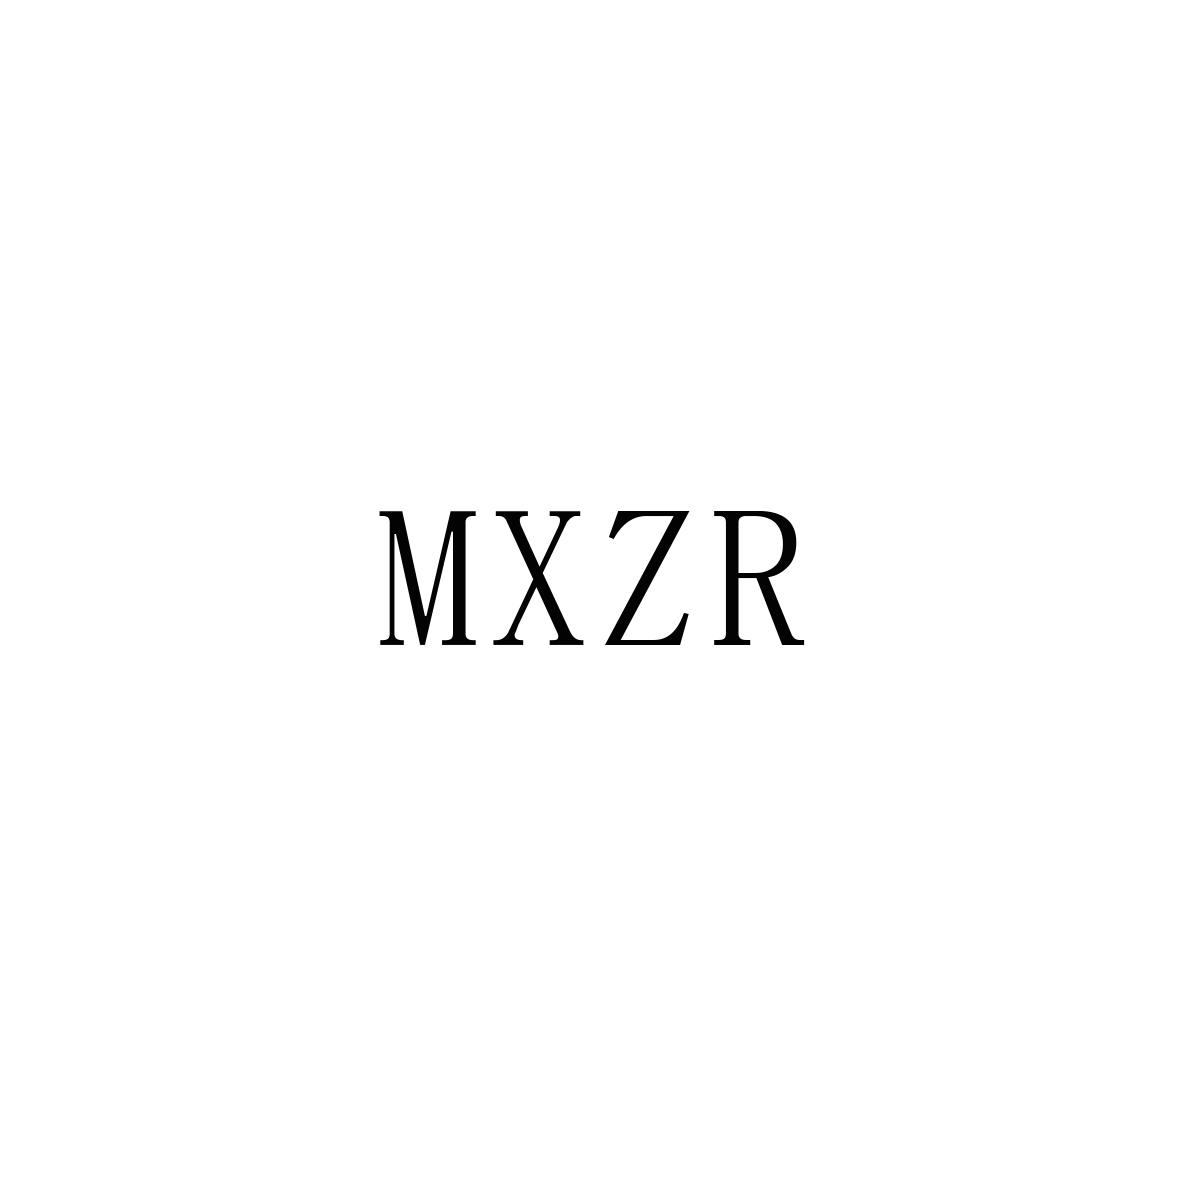 MXZR